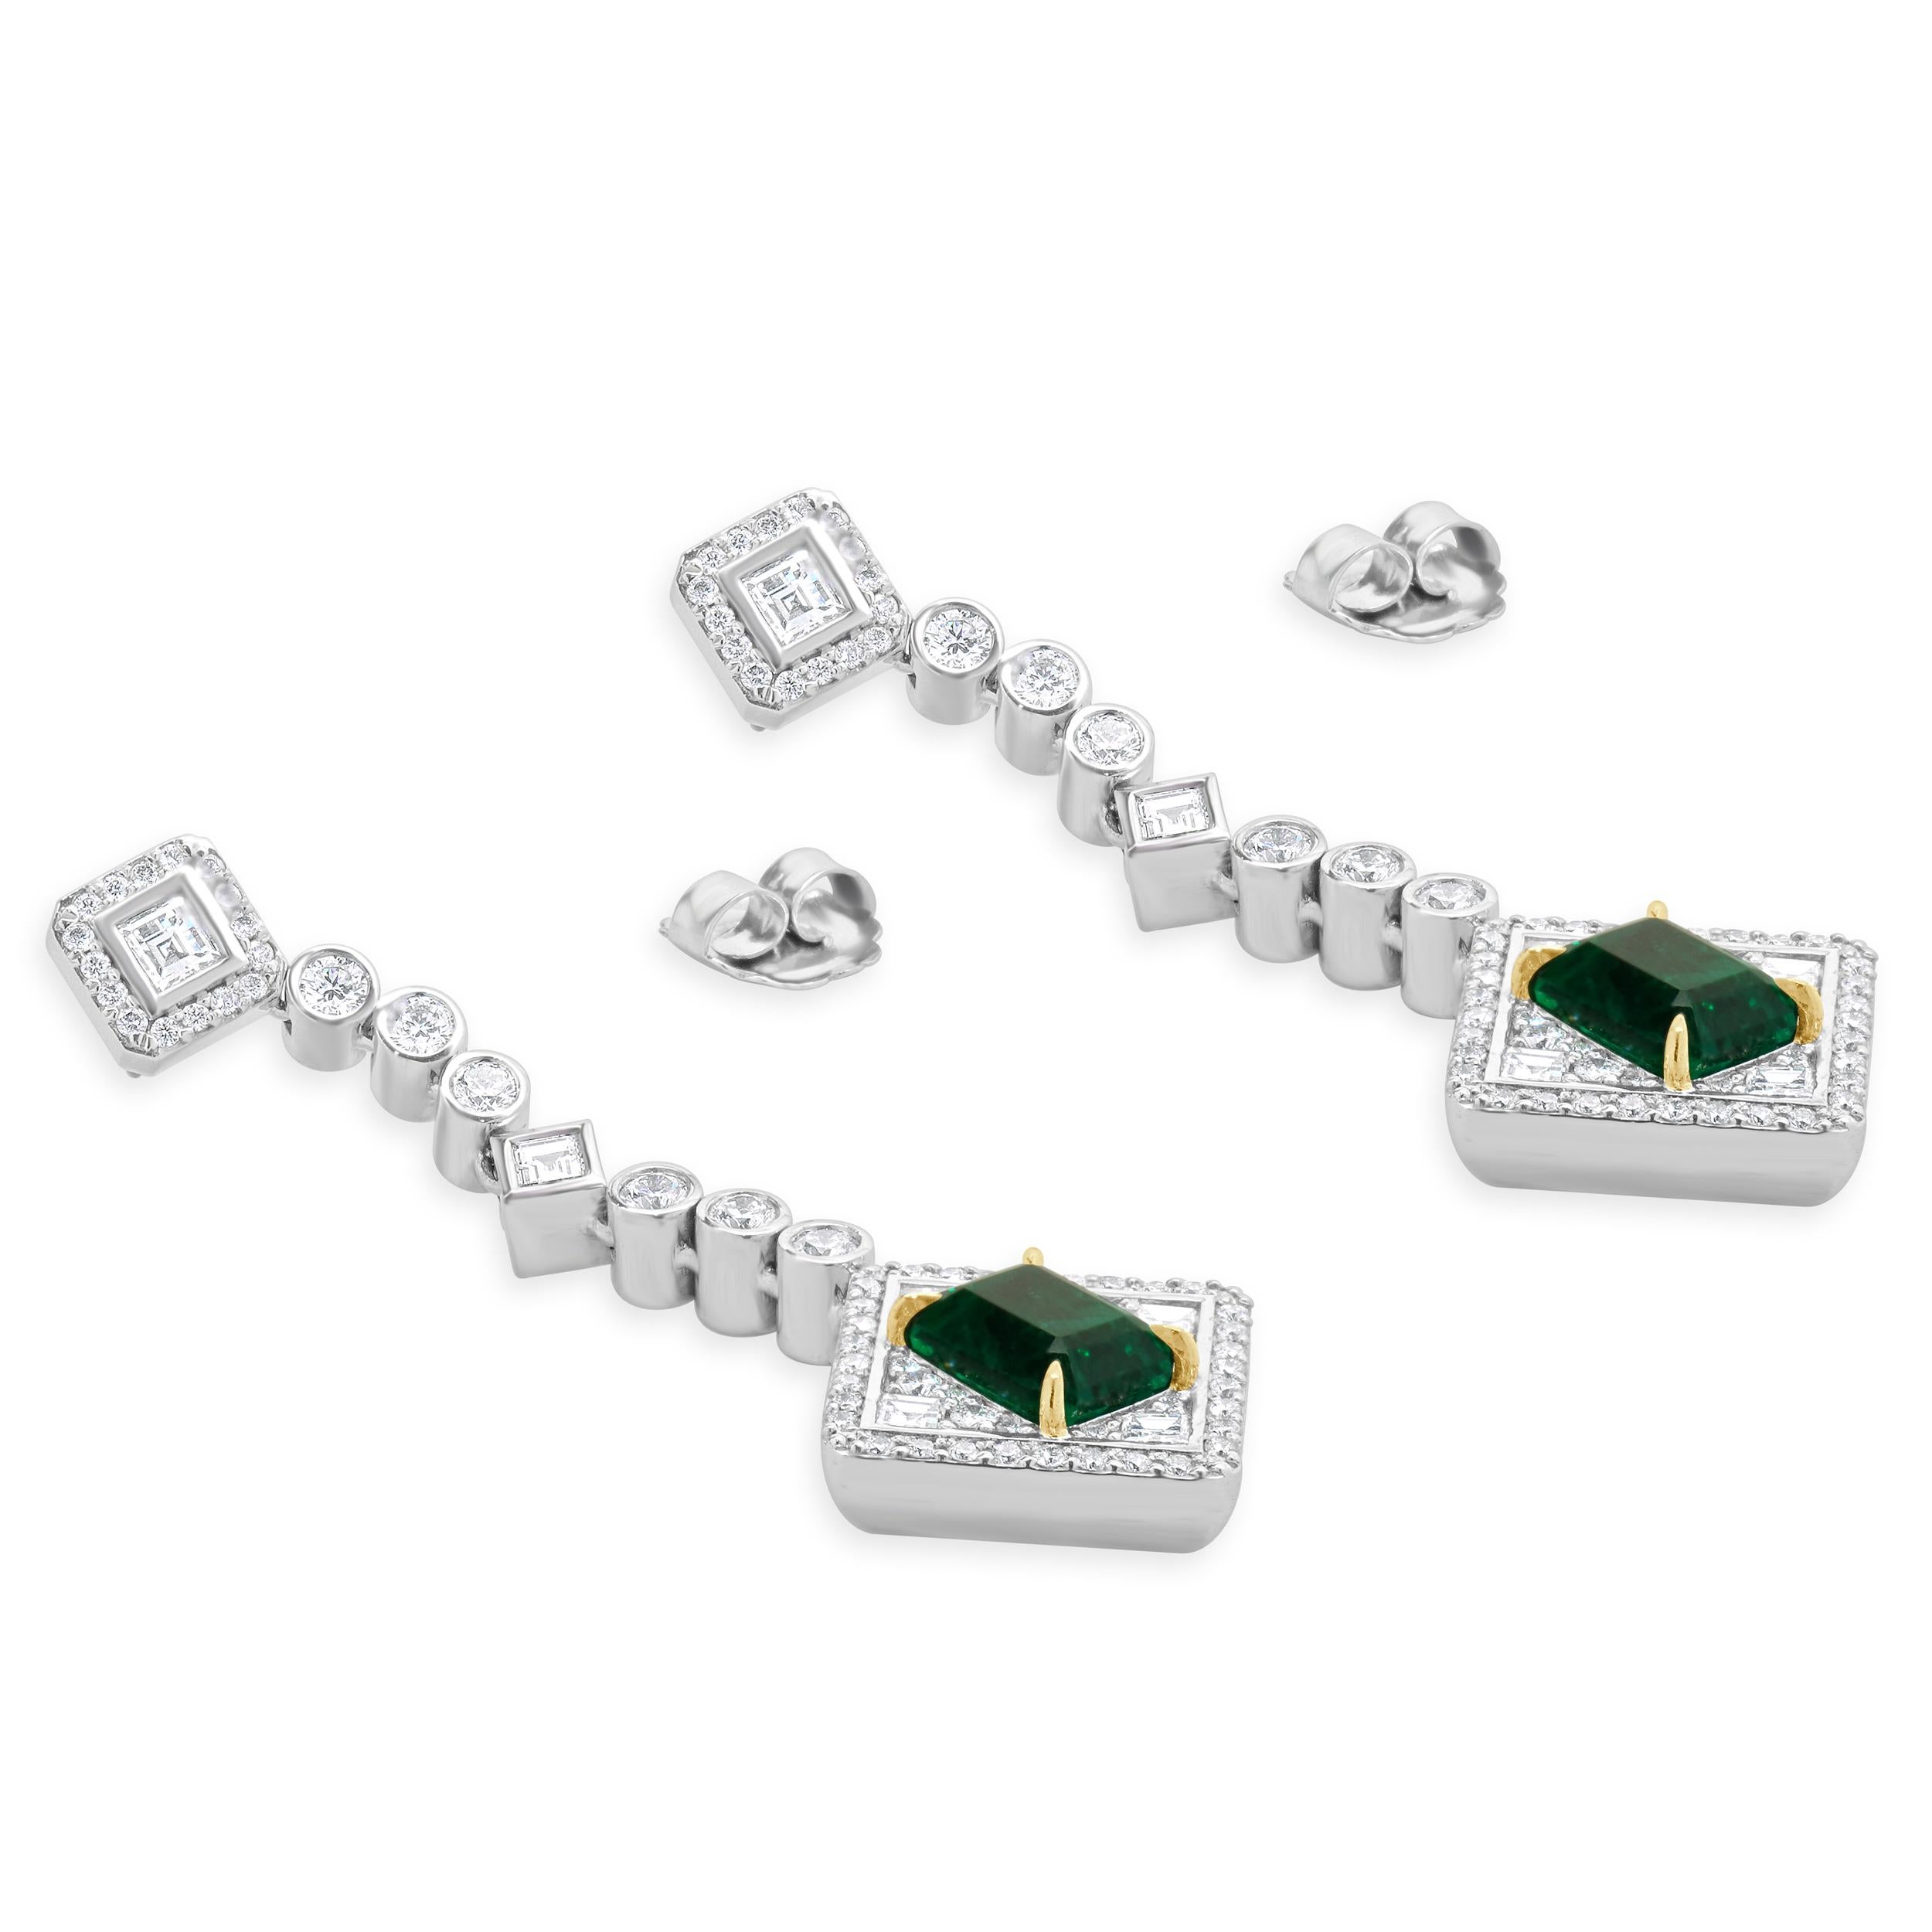 Designer: custom
Material: 18K white gold
Diamond: multi shaped cut= 4.24cttw
Color: G
Clarity: VS
Emeralds: 2 emerald cut = 6.03cttw
Weight: 29.93 grams
